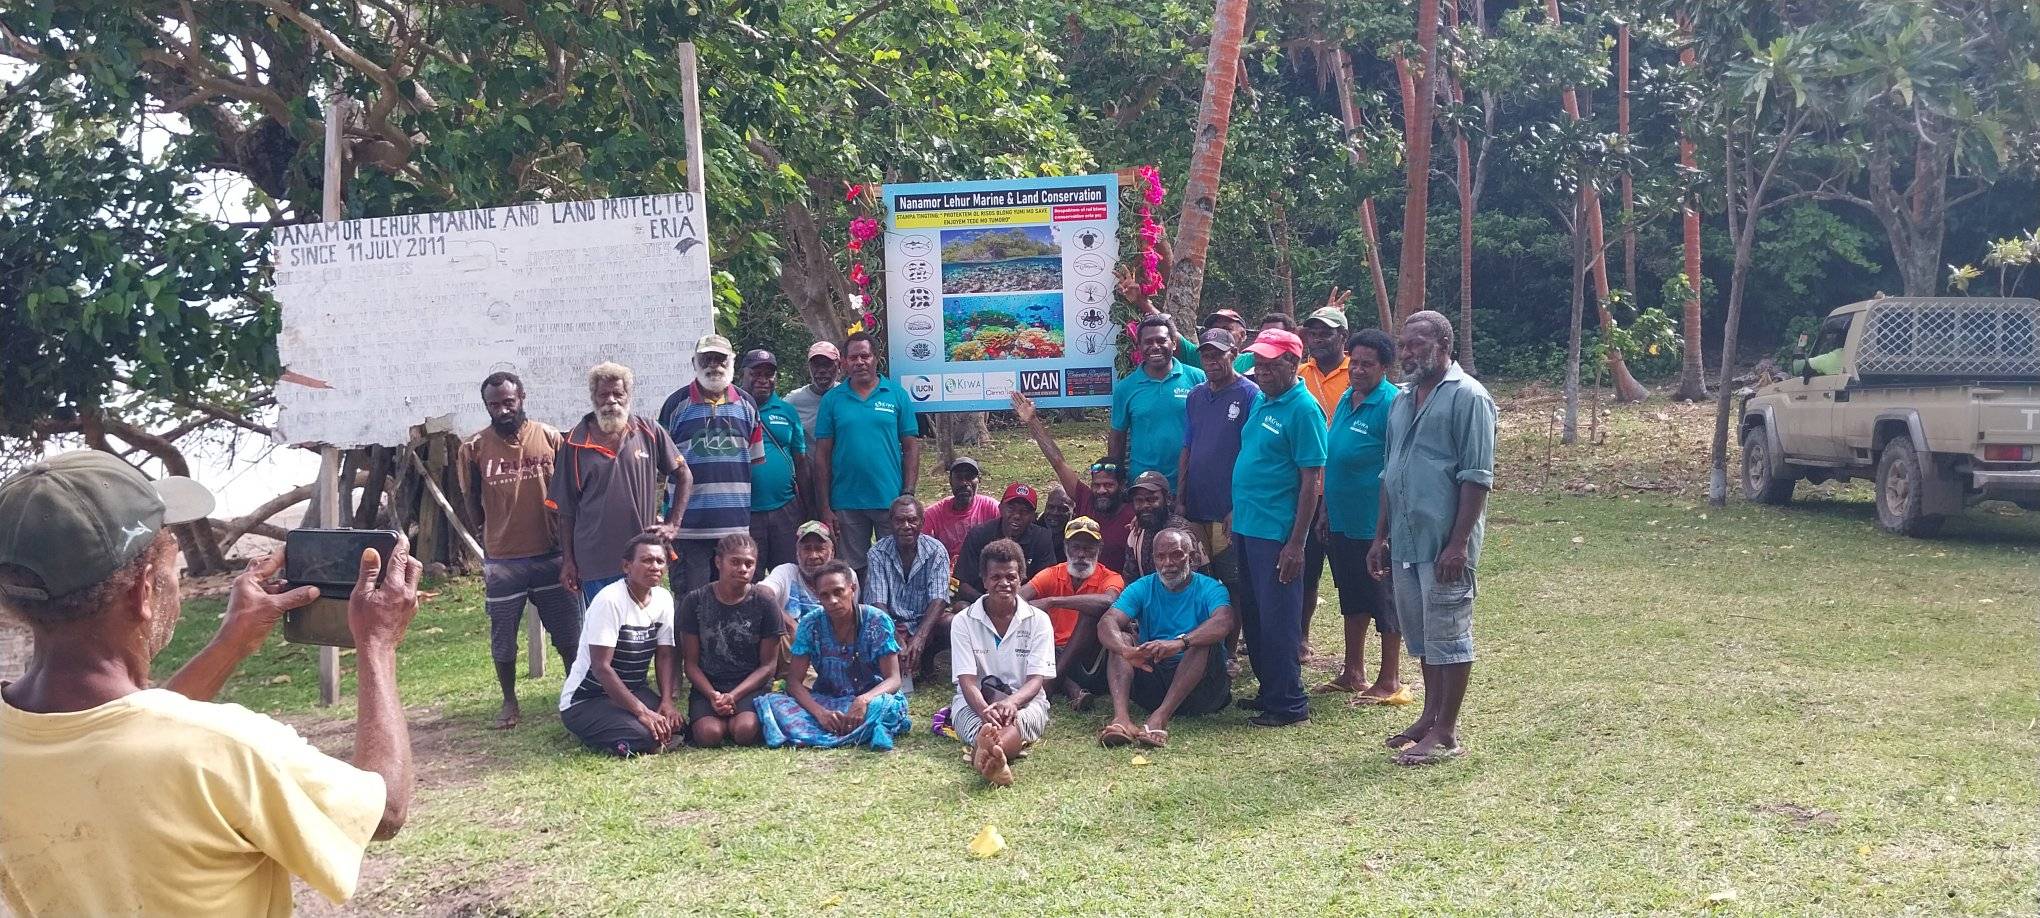 The LAMACCA Kiwa Initiative team installed Lamap Nanamor Conservation signboard.